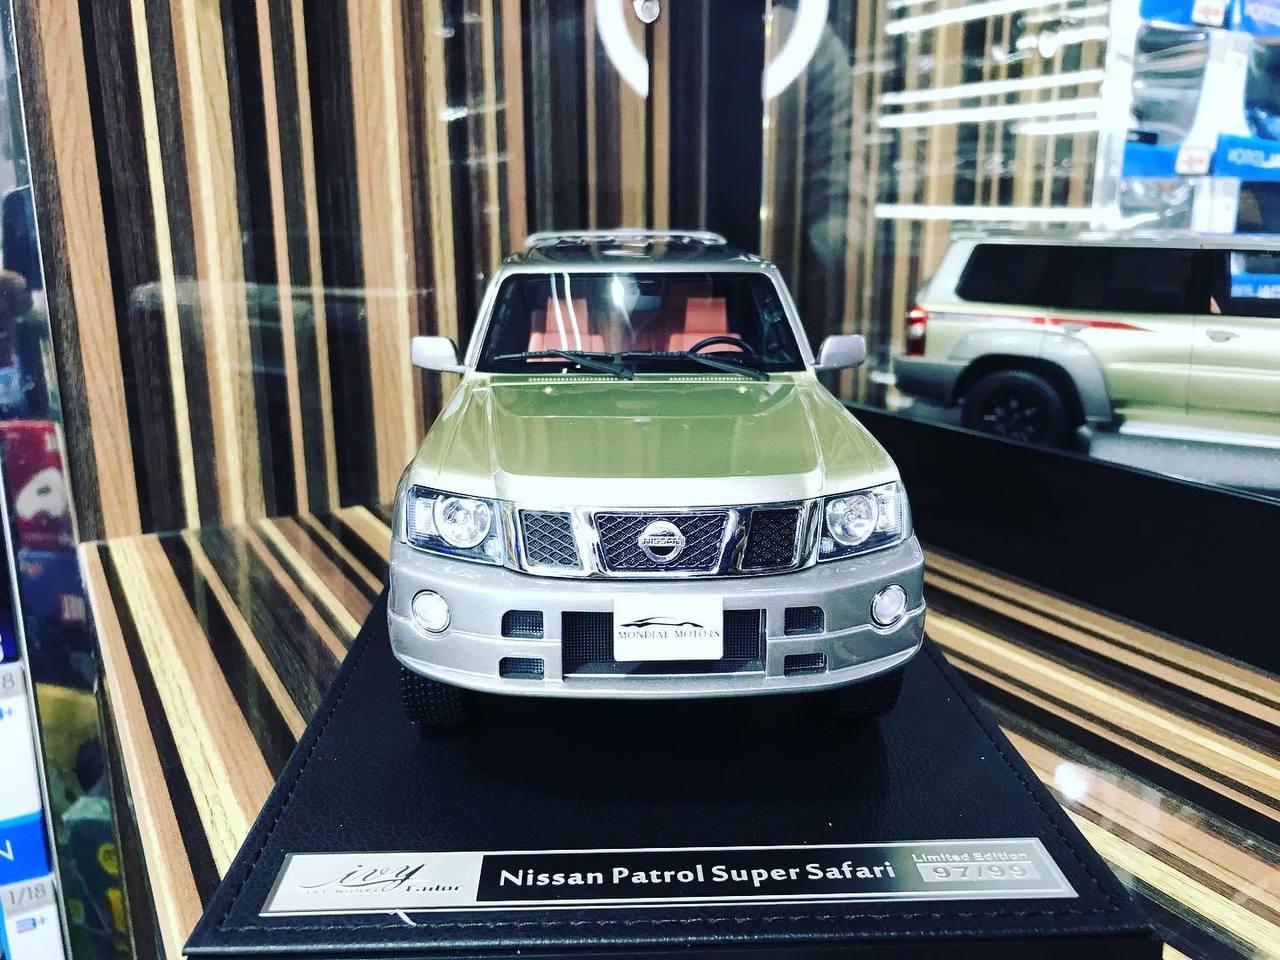 1/18 Diecast Nissan Patrol Super Safari 1:18 Gold Diecast car by IVY Models Scale Model Car